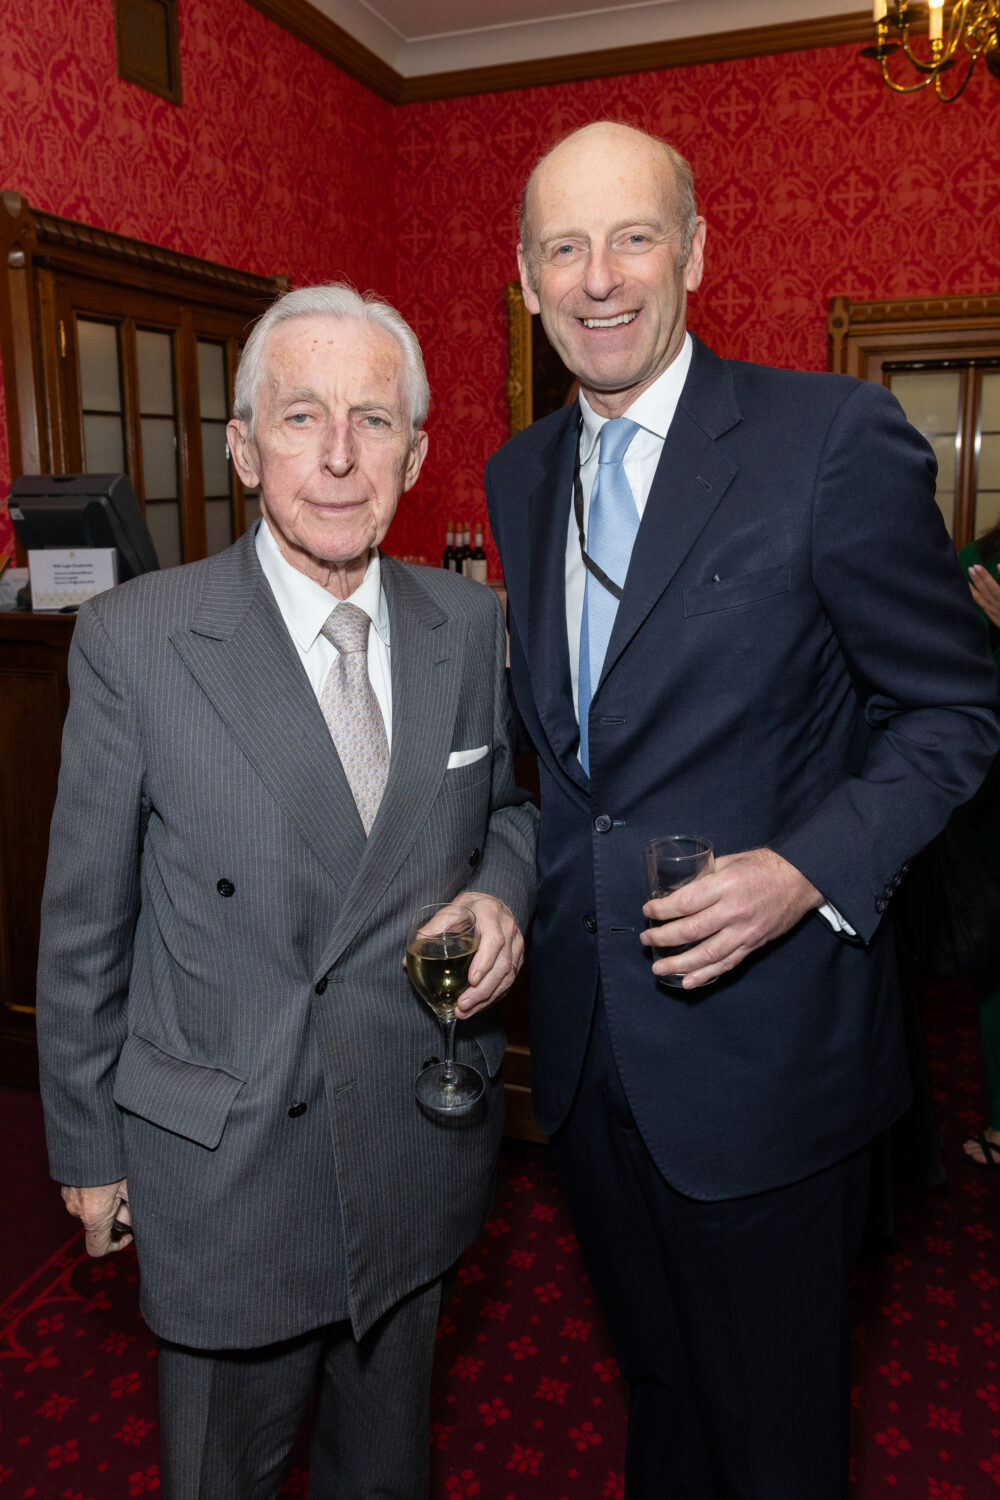 The Lord Brennan KC, and Rupert Goodman, Chairman of the British-Kazakh Society